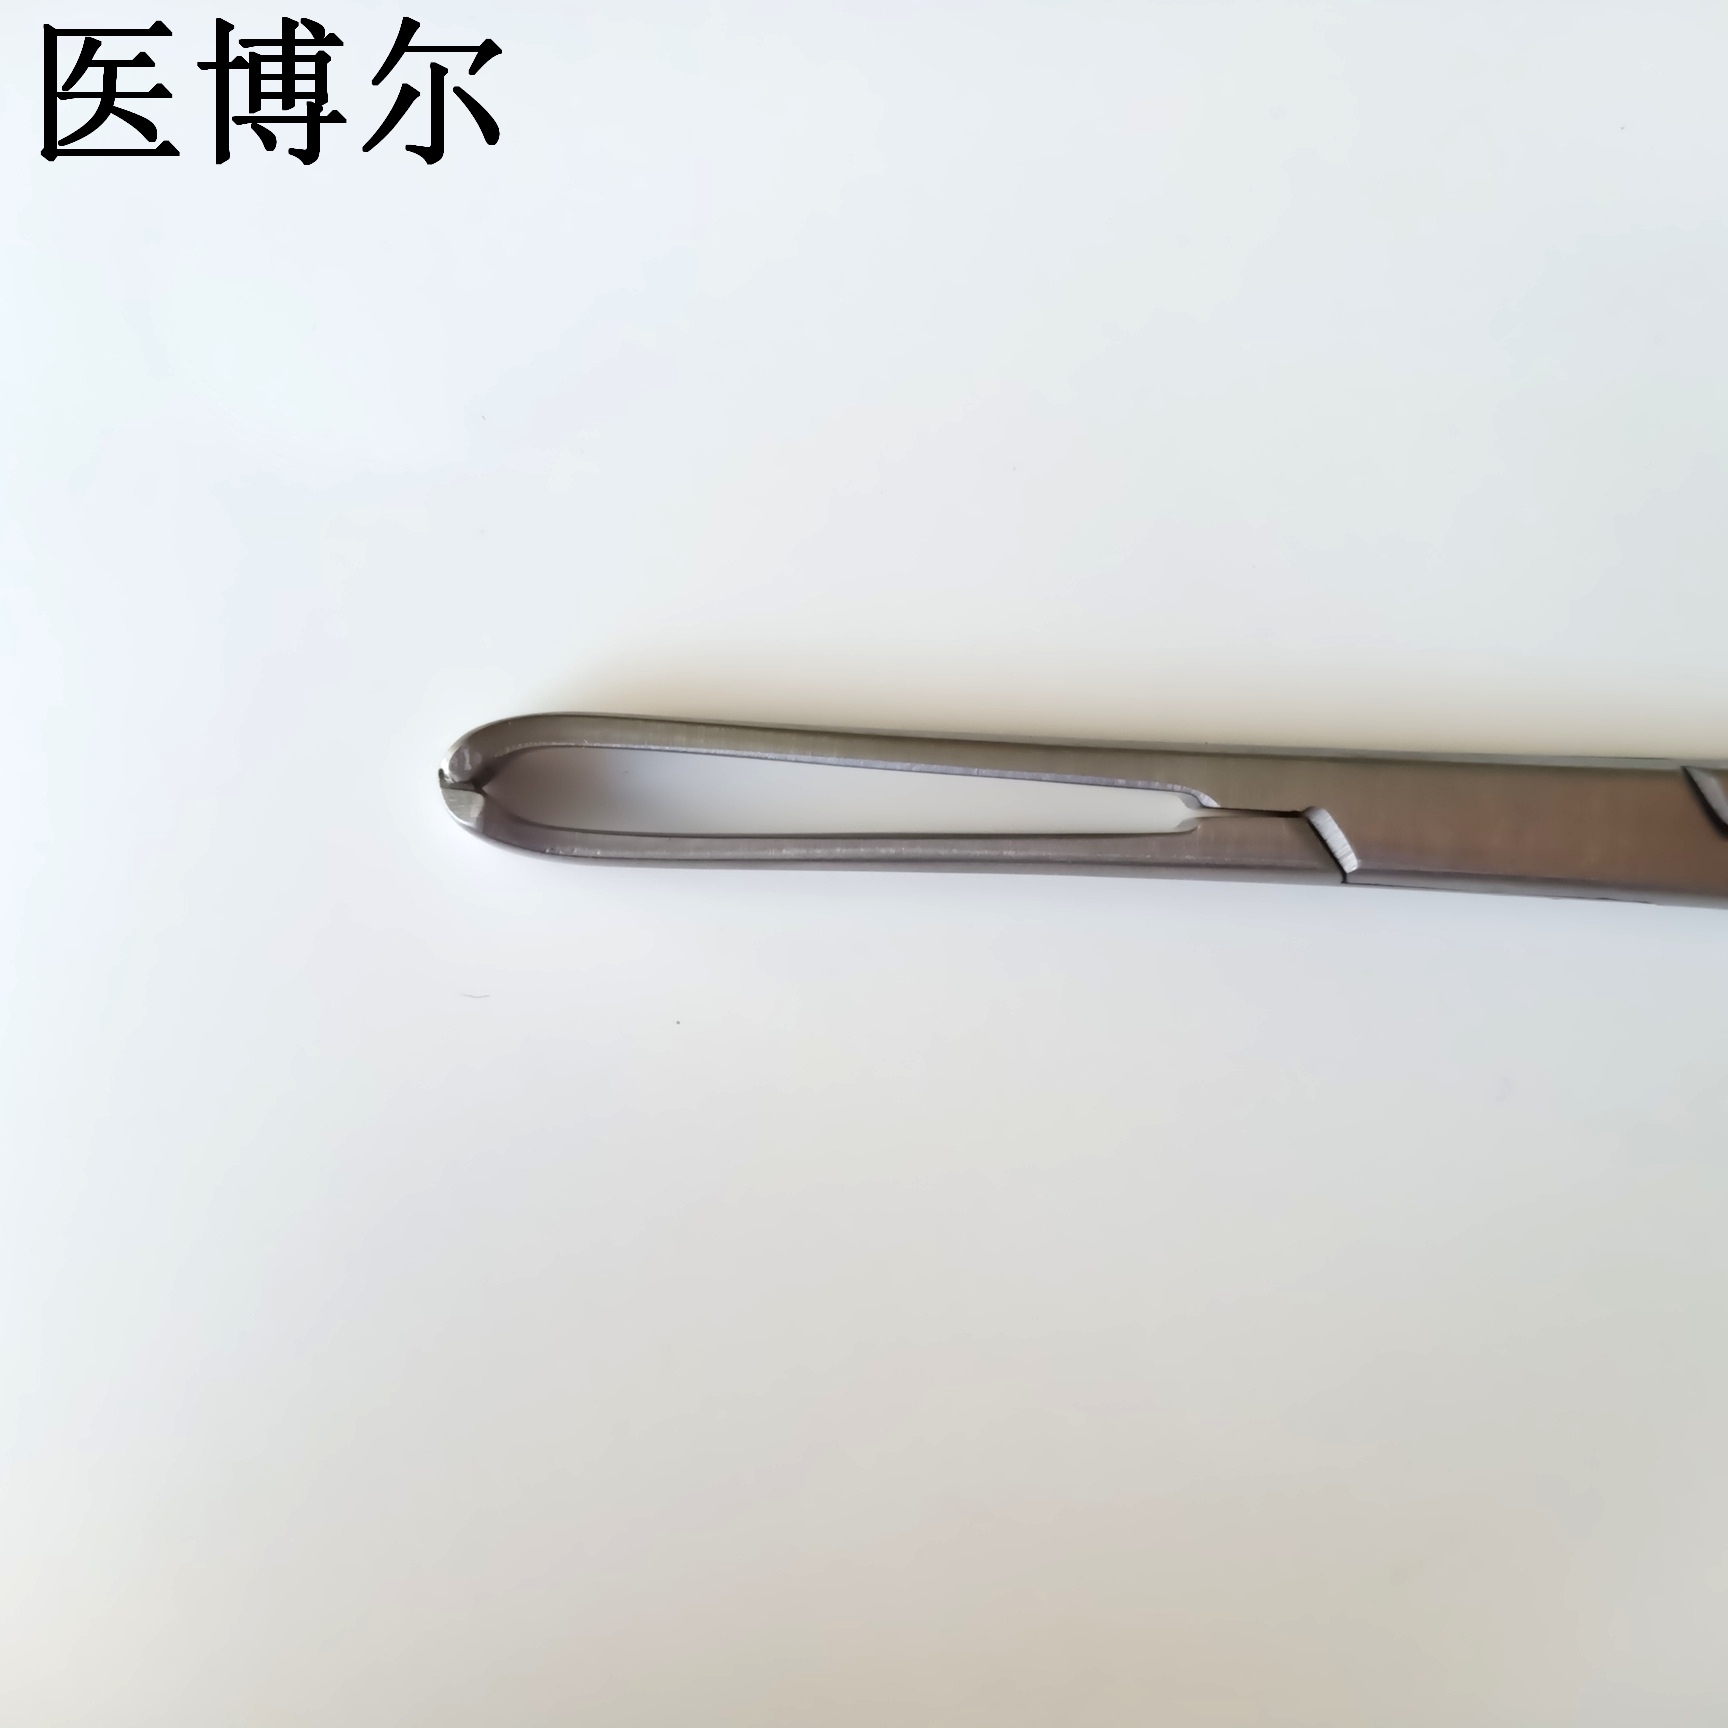 14cm组织钳 (4)_看图王.jpg